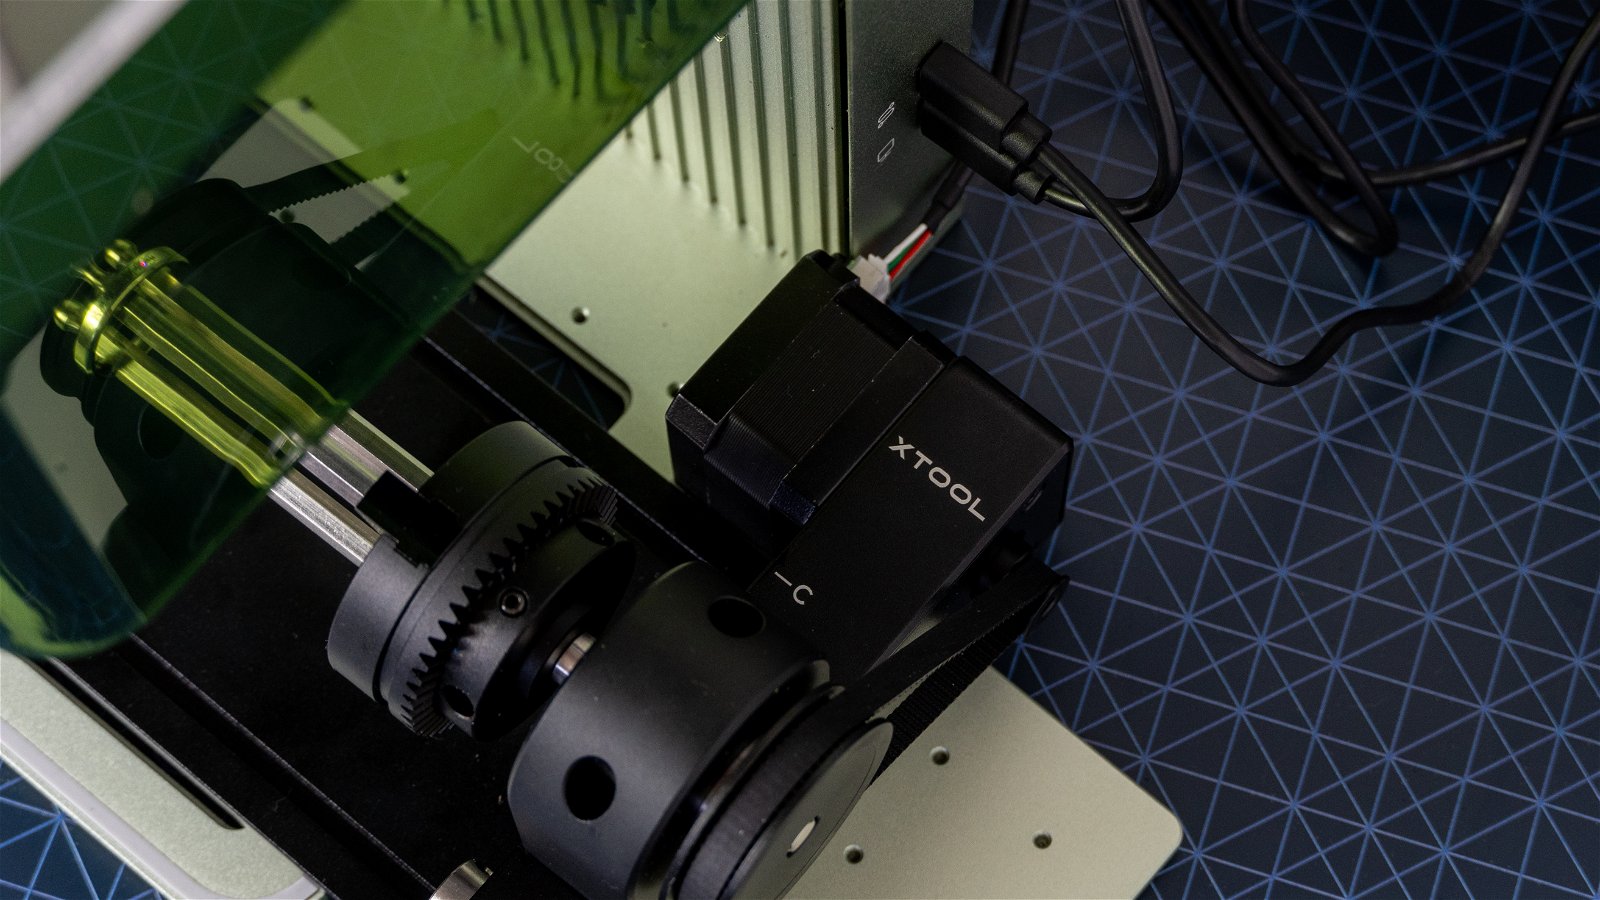 XTool-grabador láser F1 con diodo IR, máquina de grabado láser